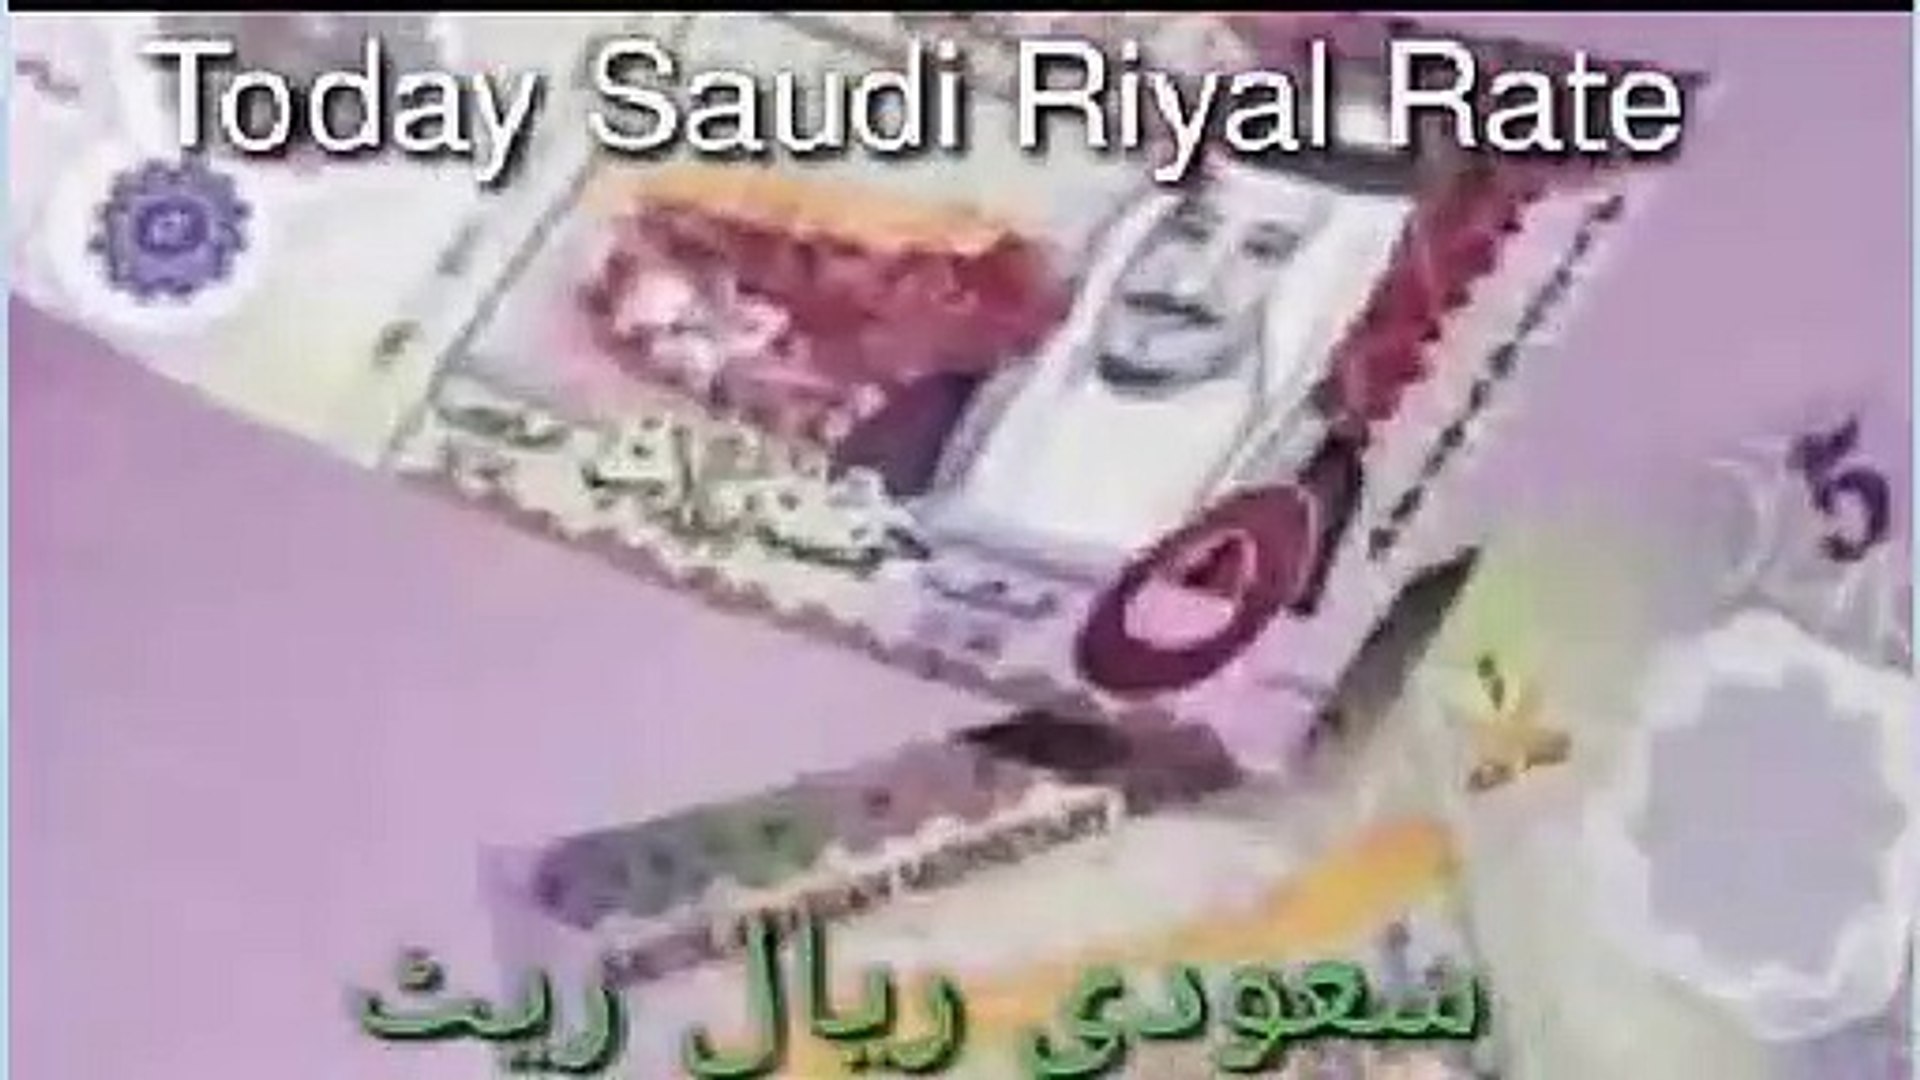 Pakistan today riyal saudi rate in SAR TO